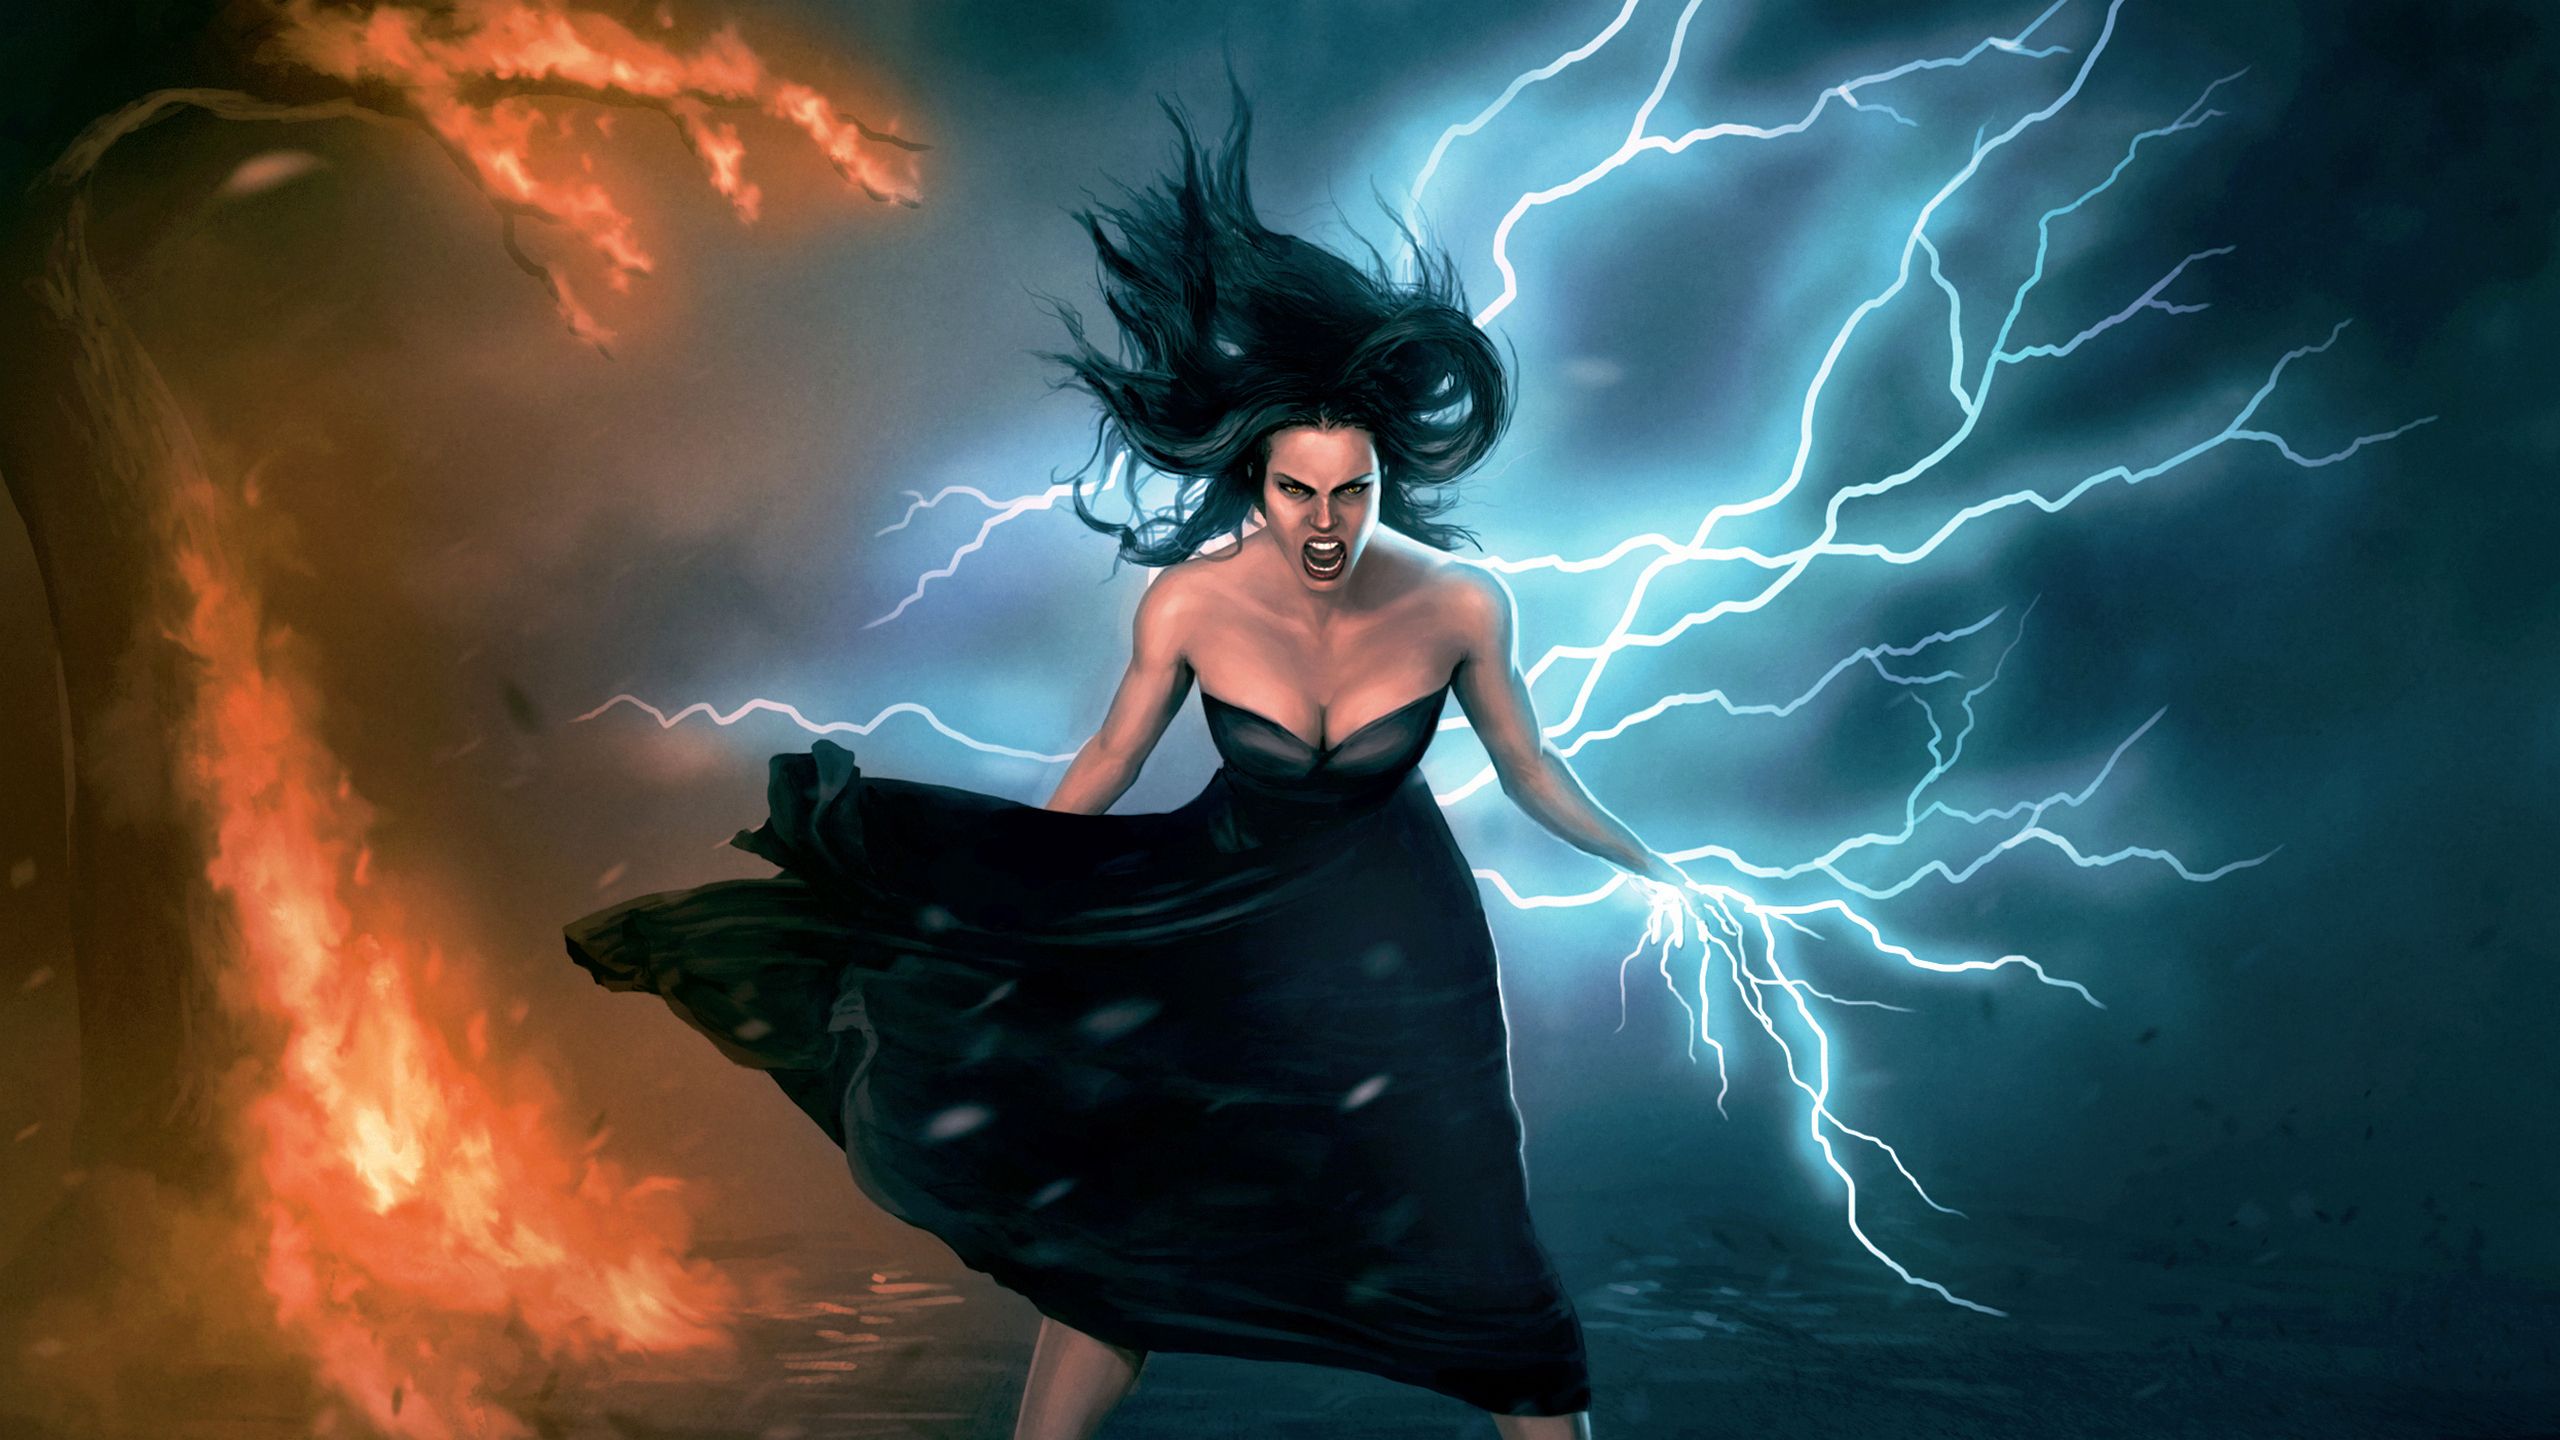 Desktop Wallpaper Magic Warriors Lightning female Fantasy 2560x1440